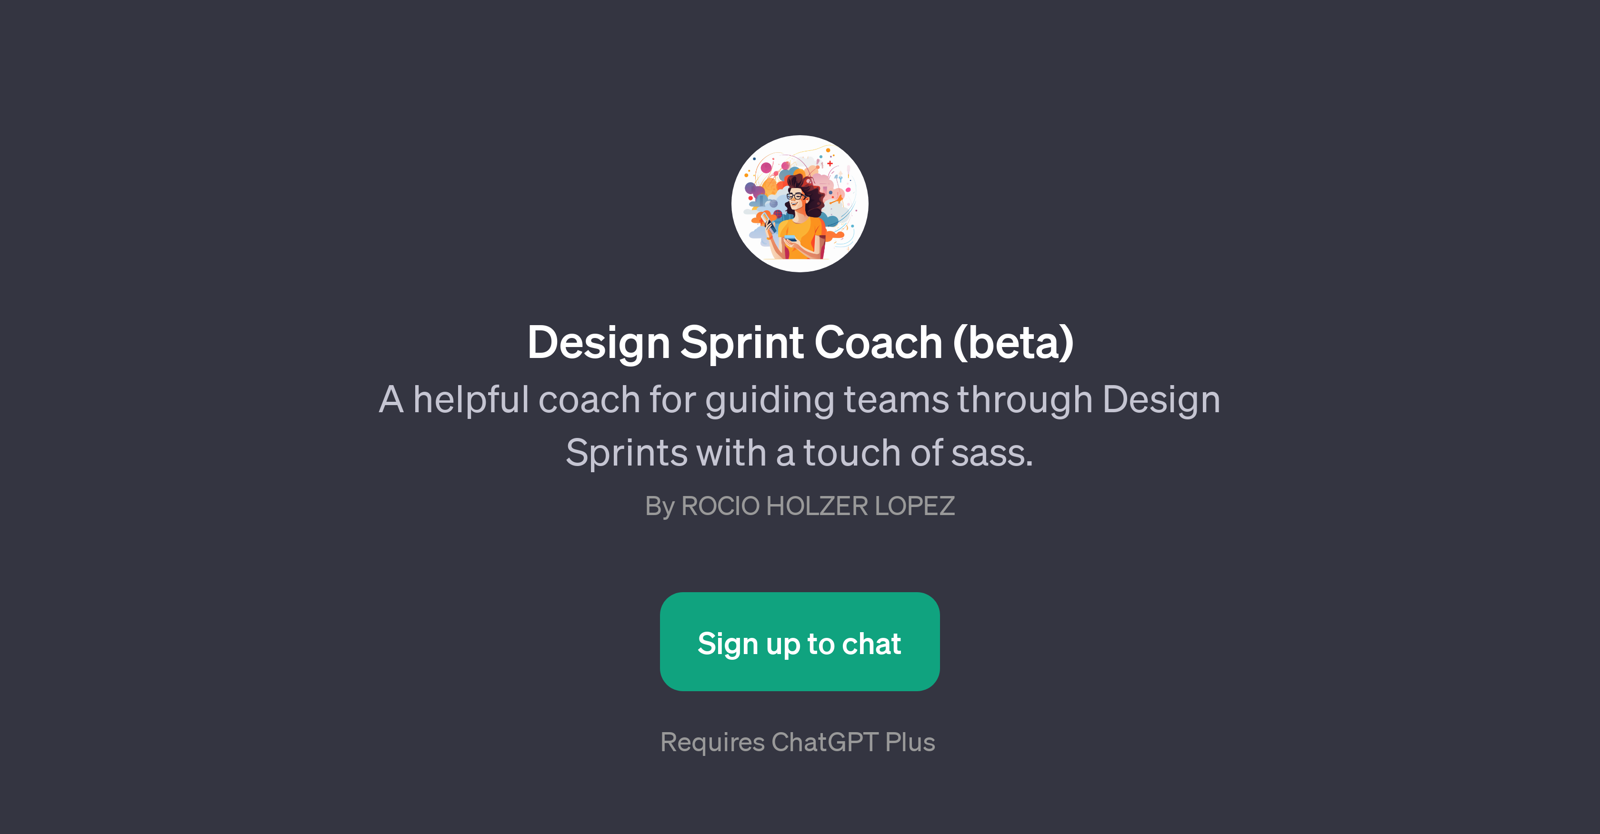 Design Sprint Coach website